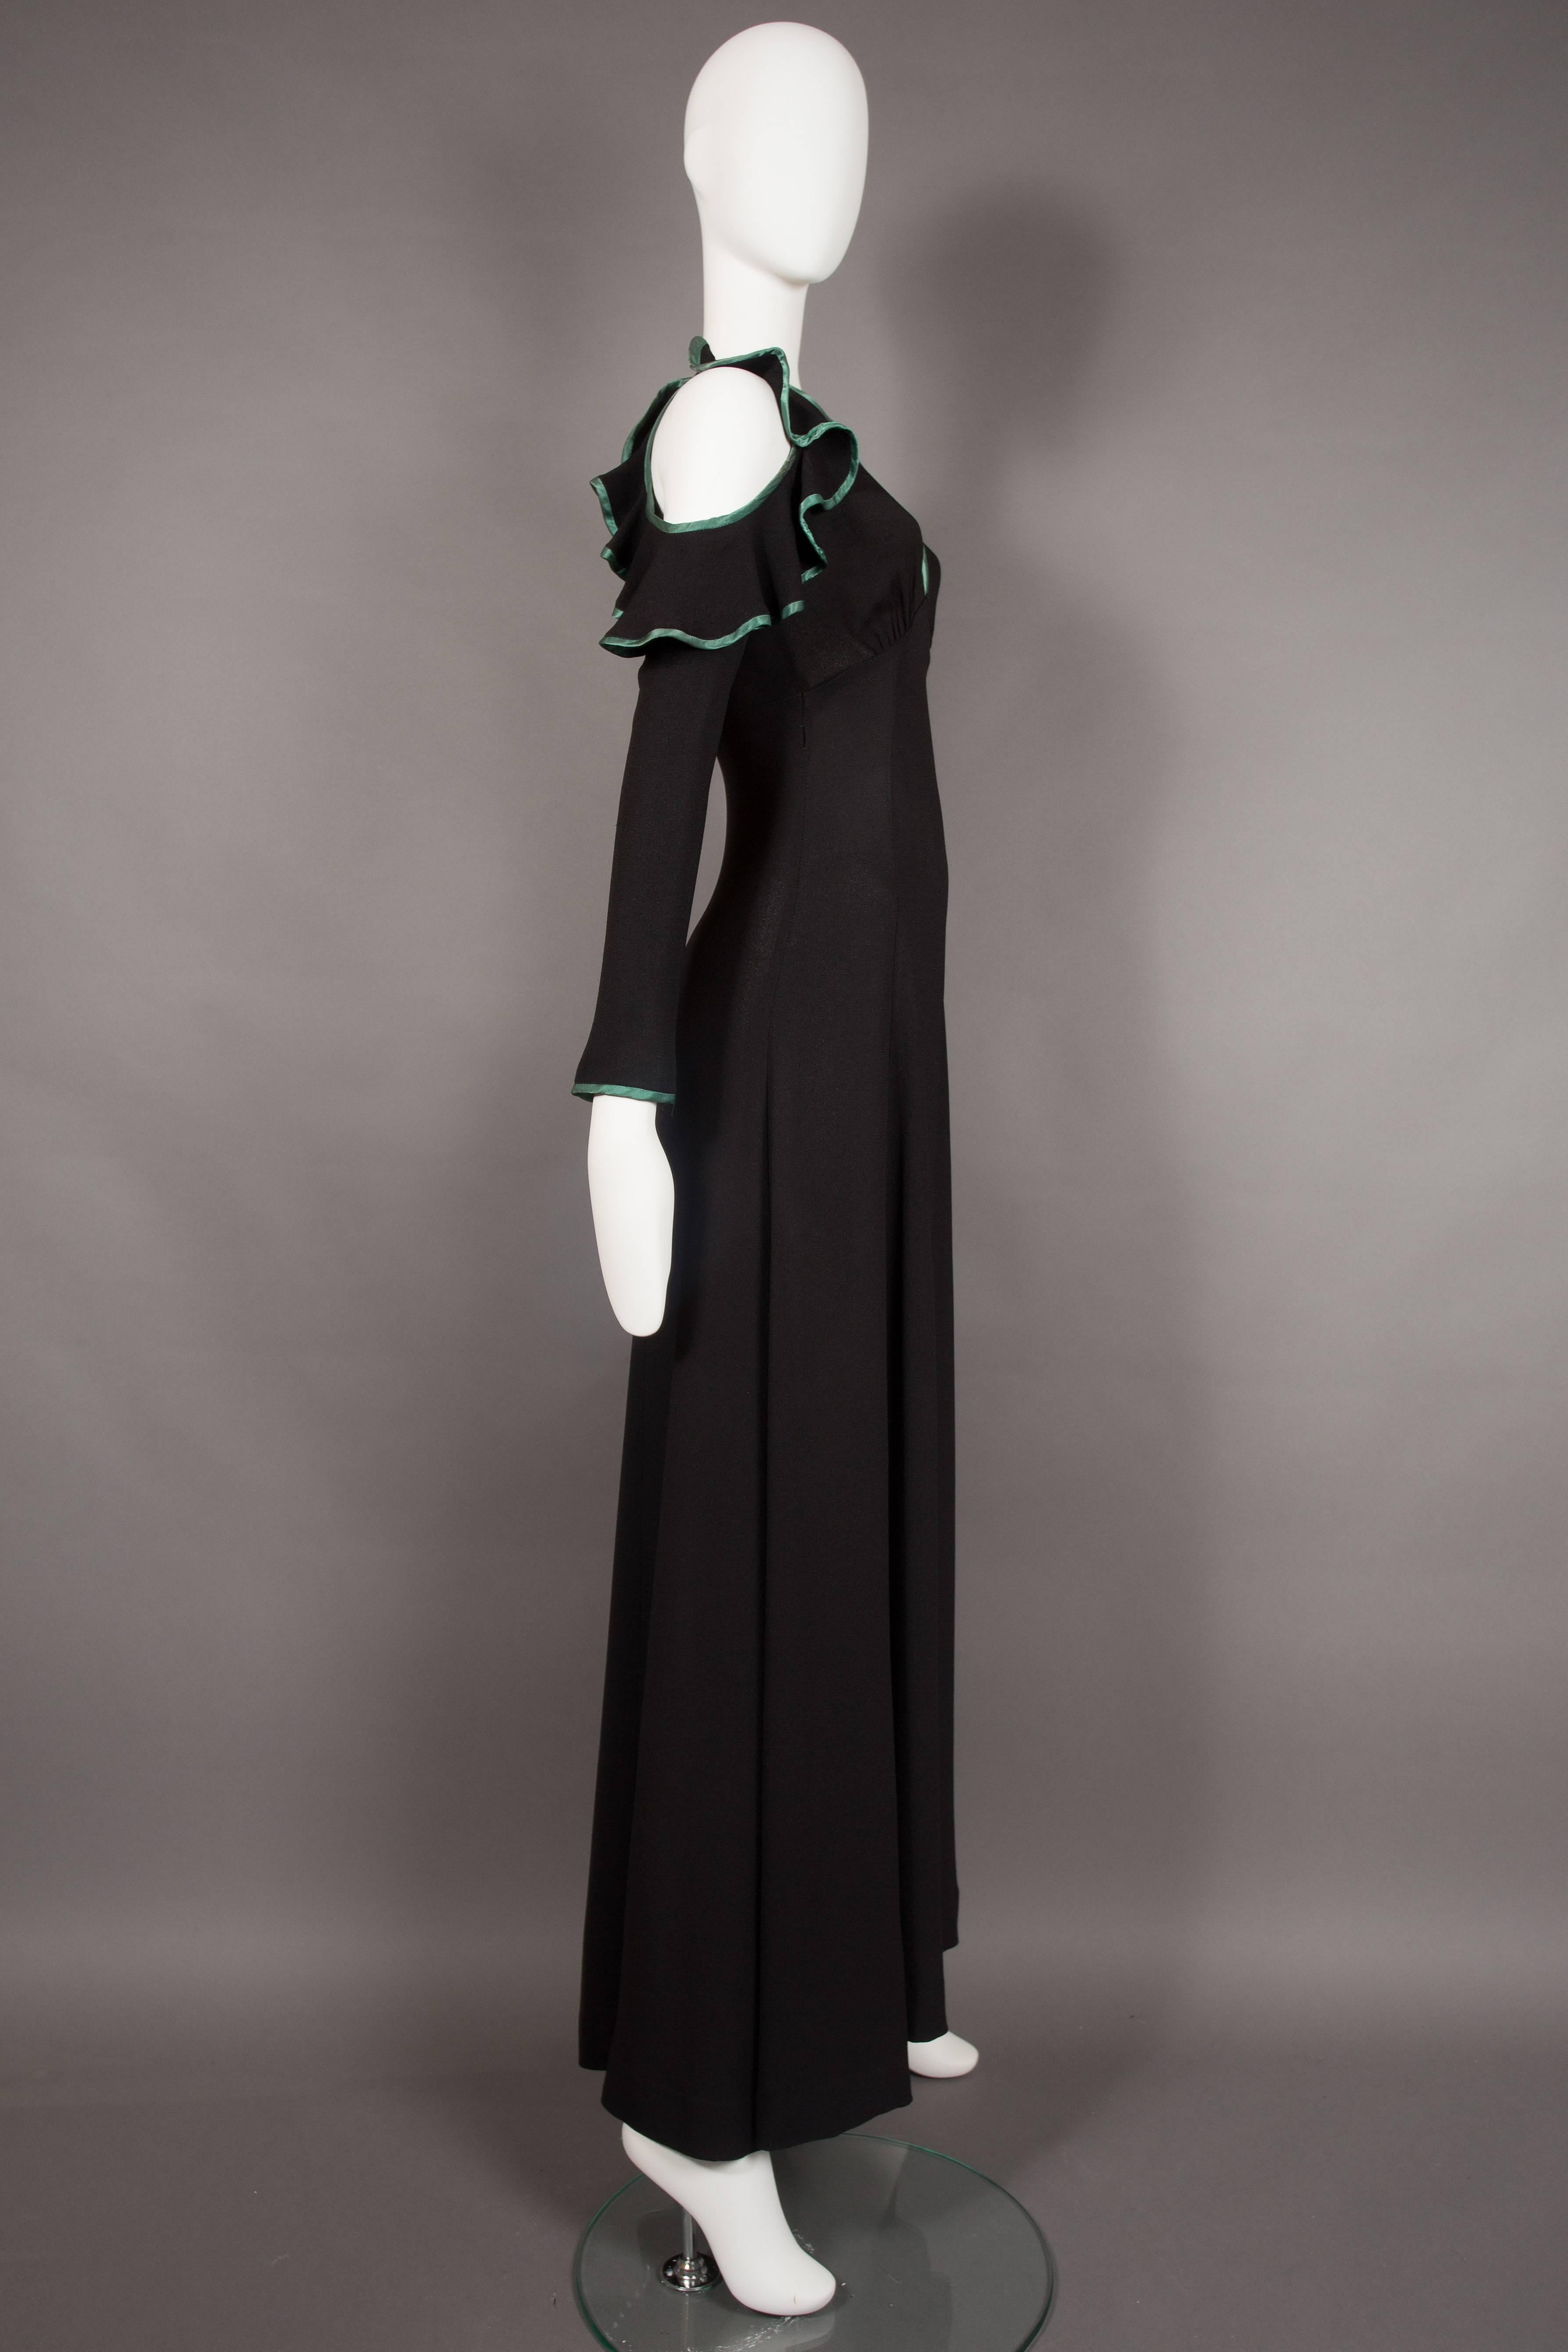 Black Ossie Clark black cold shoulder evening dress with green satin trim, circa 1968